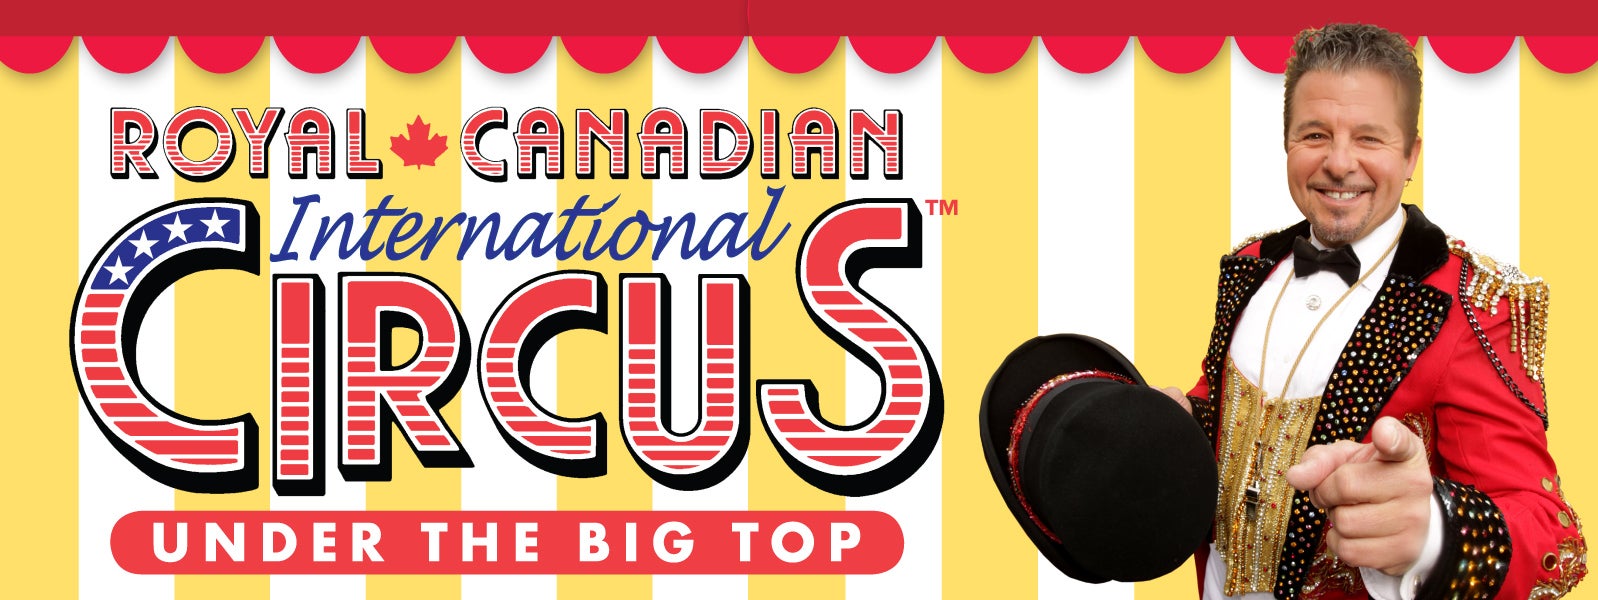 Royal Canadian International Circus 